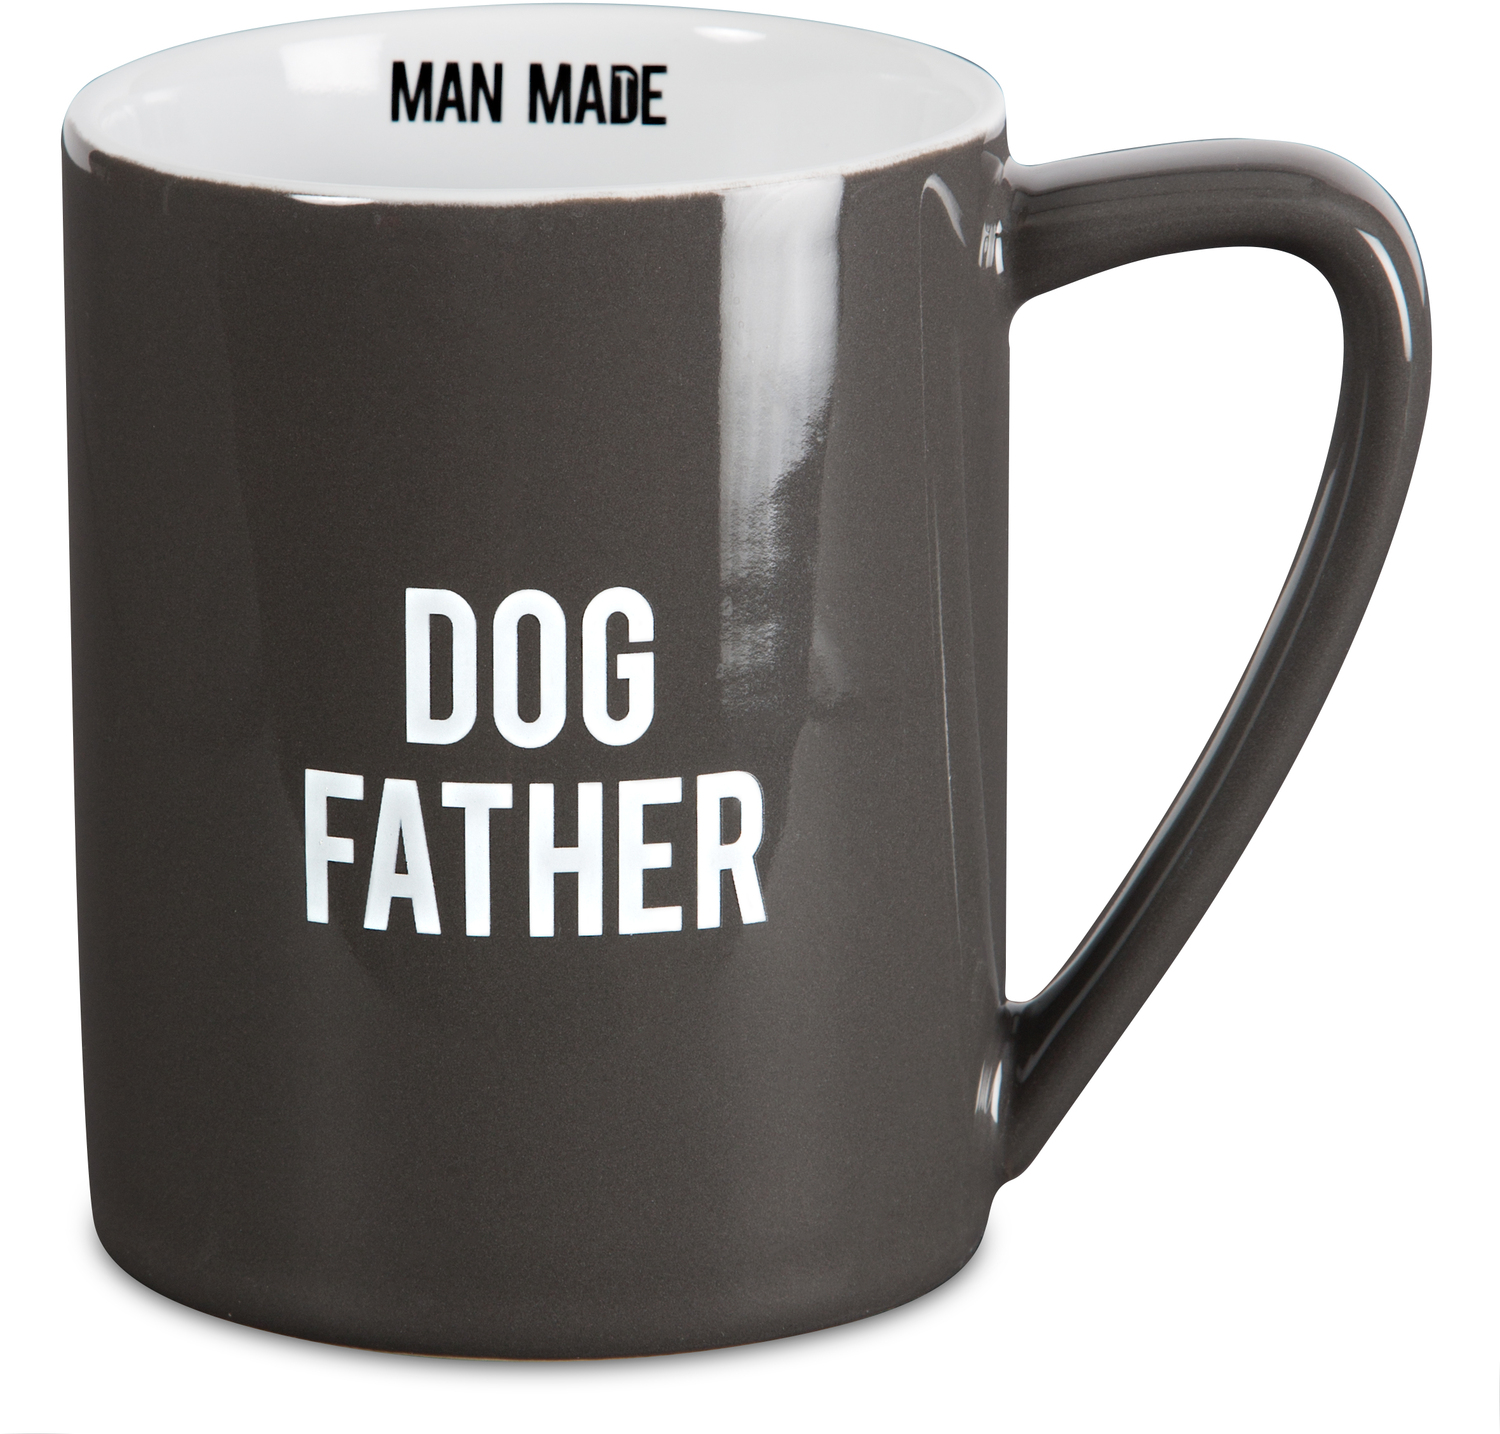 Dog Father by Man Made - Dog Father - 18 oz. Mug